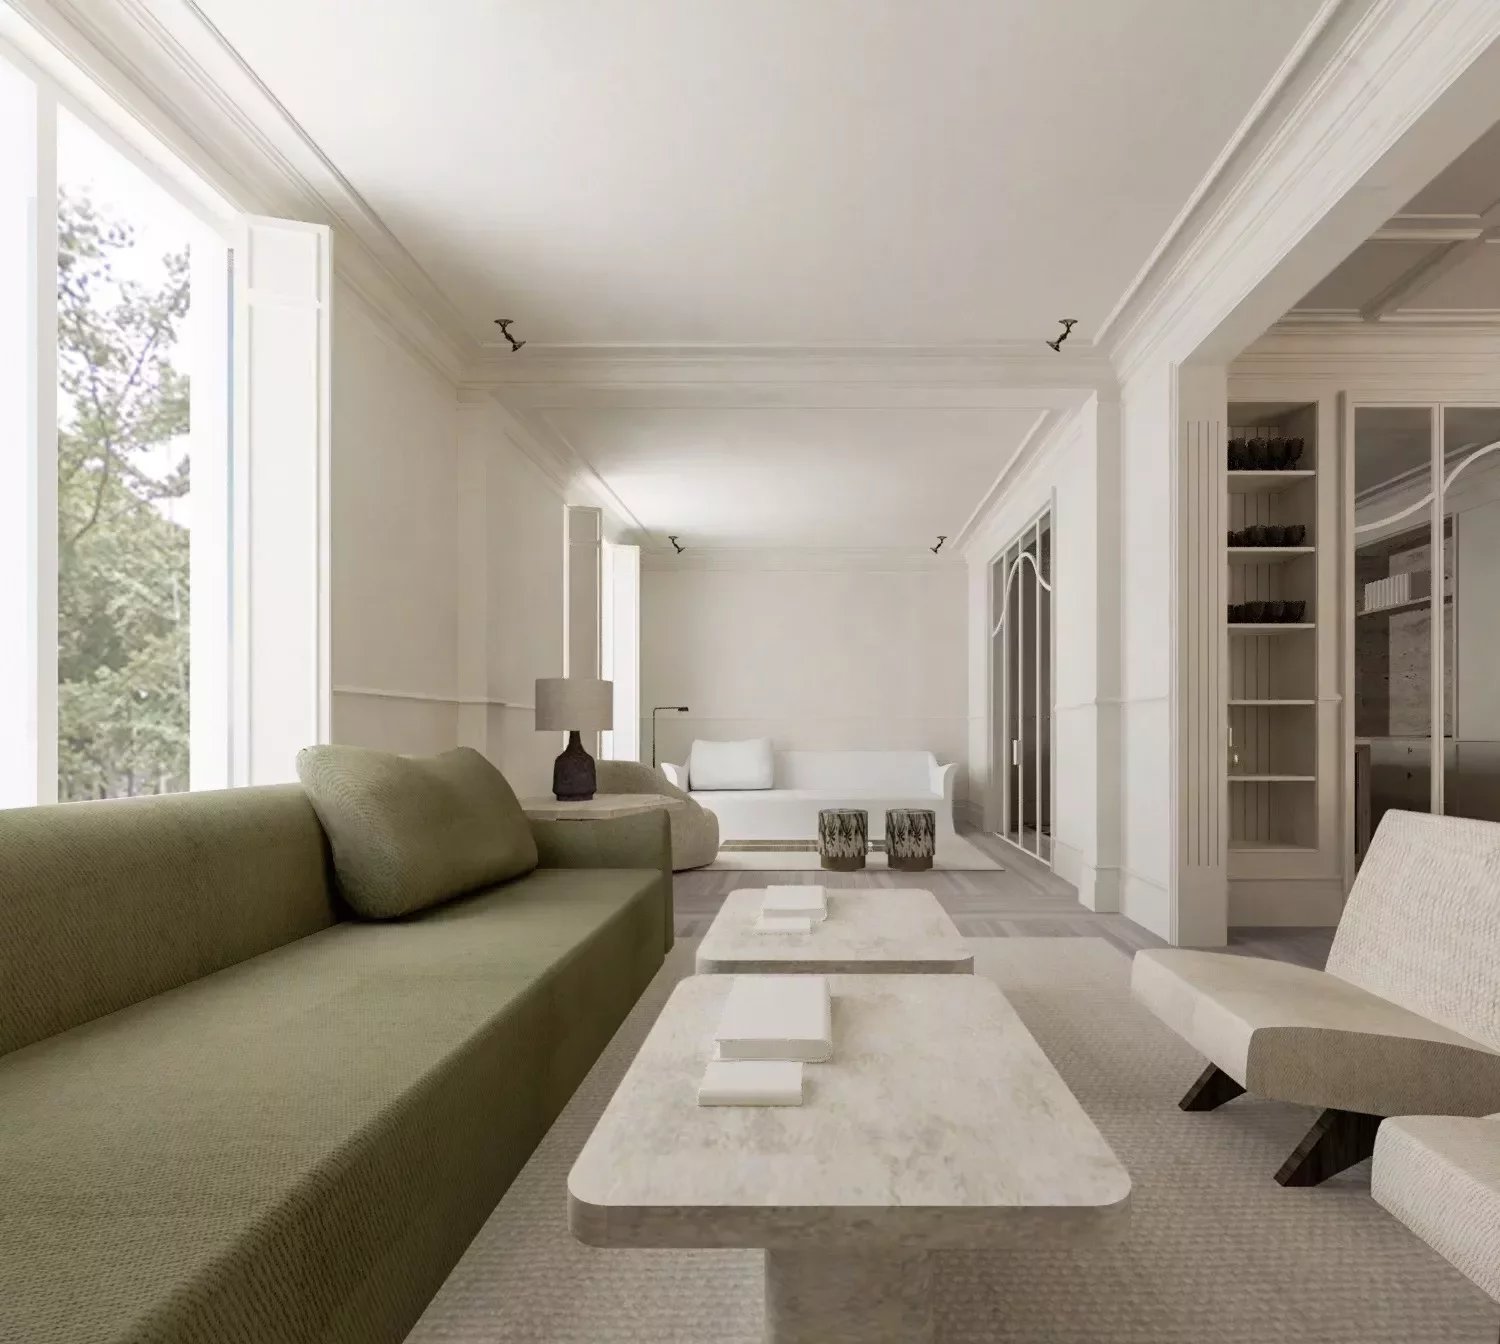 Madrid - Almagro - Chamberi - Exterior 3 bedroom en suite